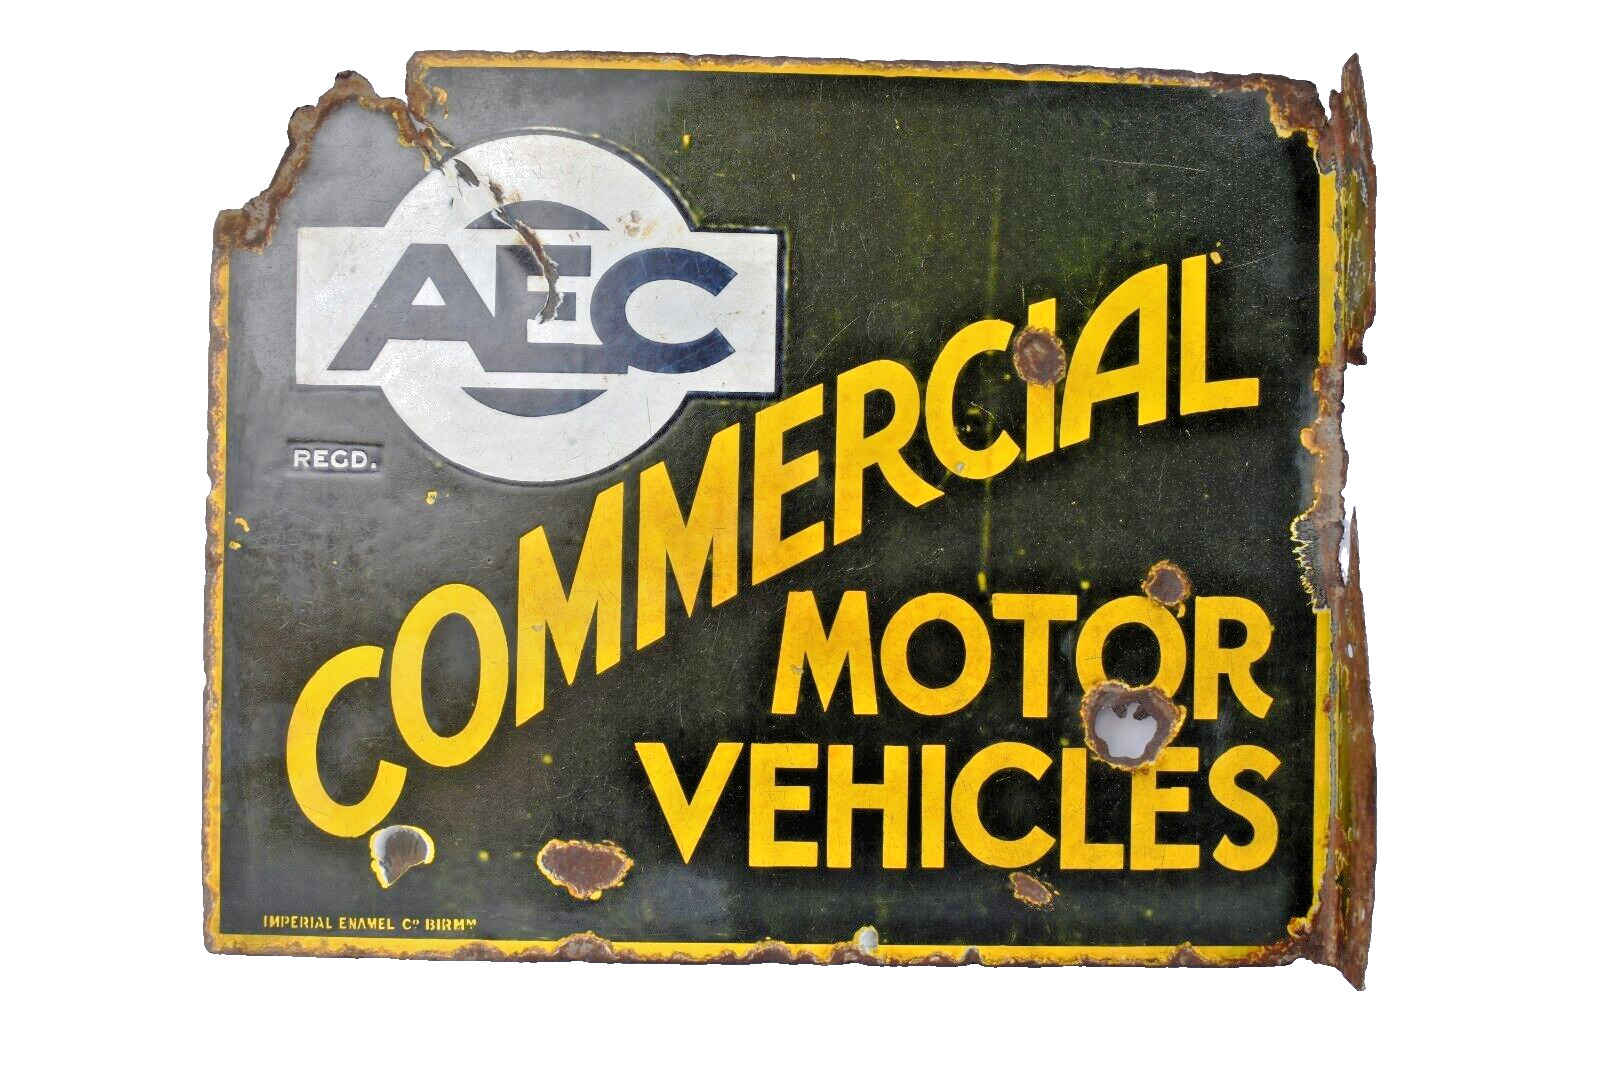 Vintage Aec Commercial Motor Vehicle Sign Porcelain Enamel By Imperial Enamel B